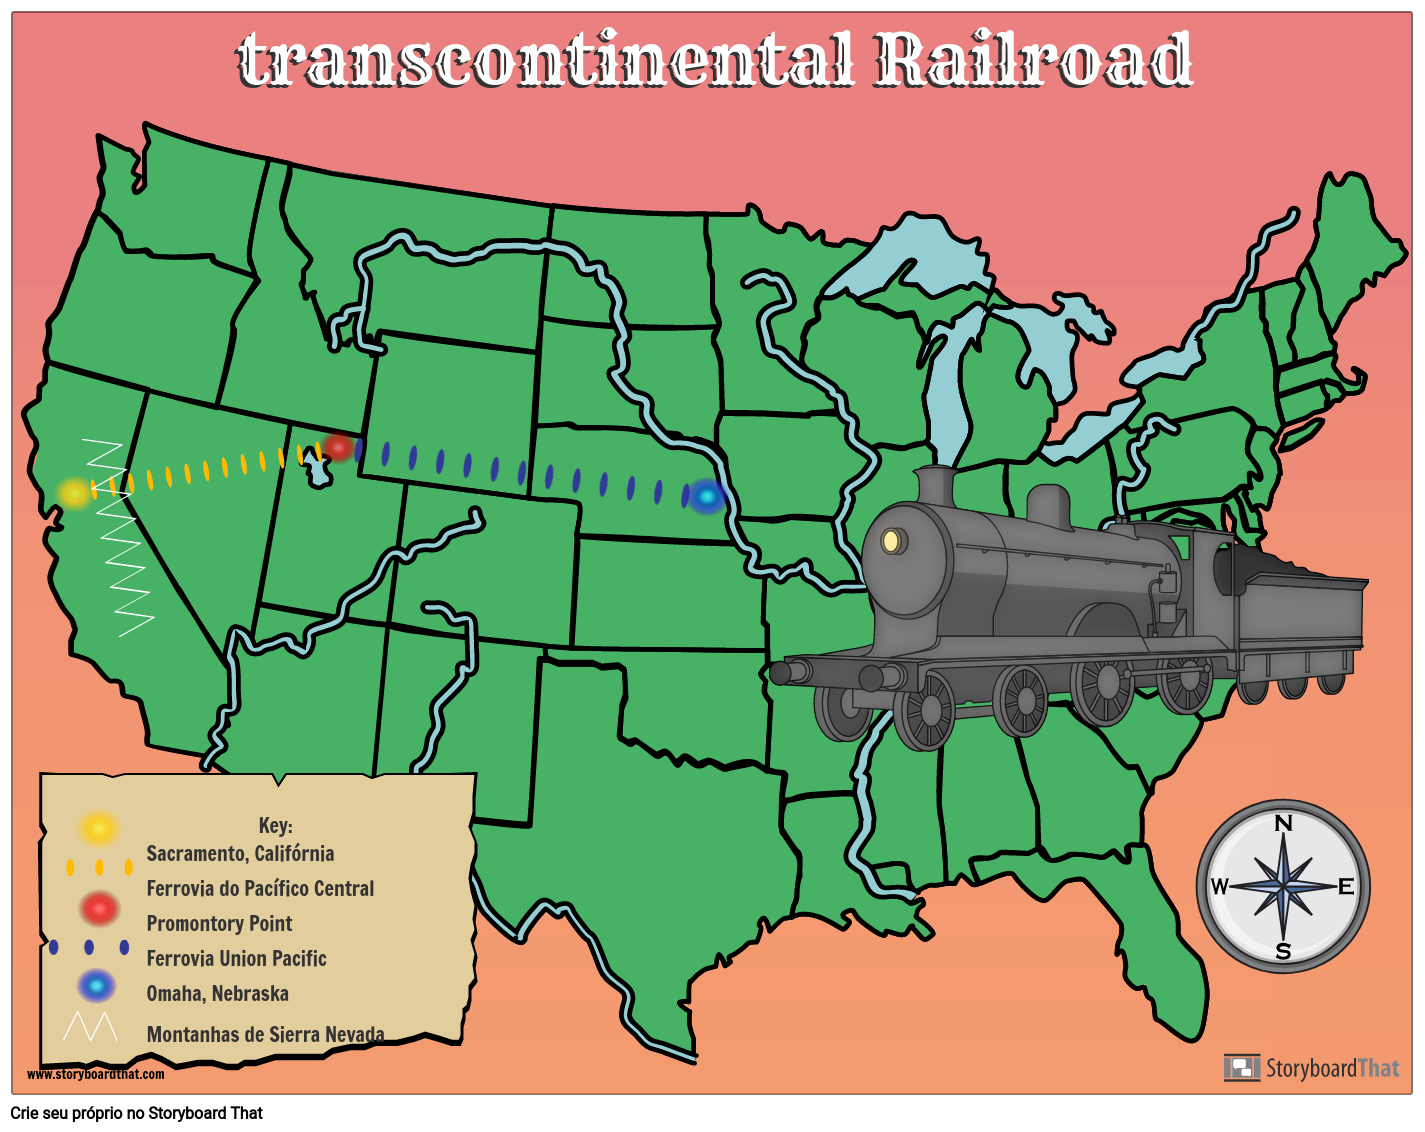 Mapa da Ferrovia Transcontinental